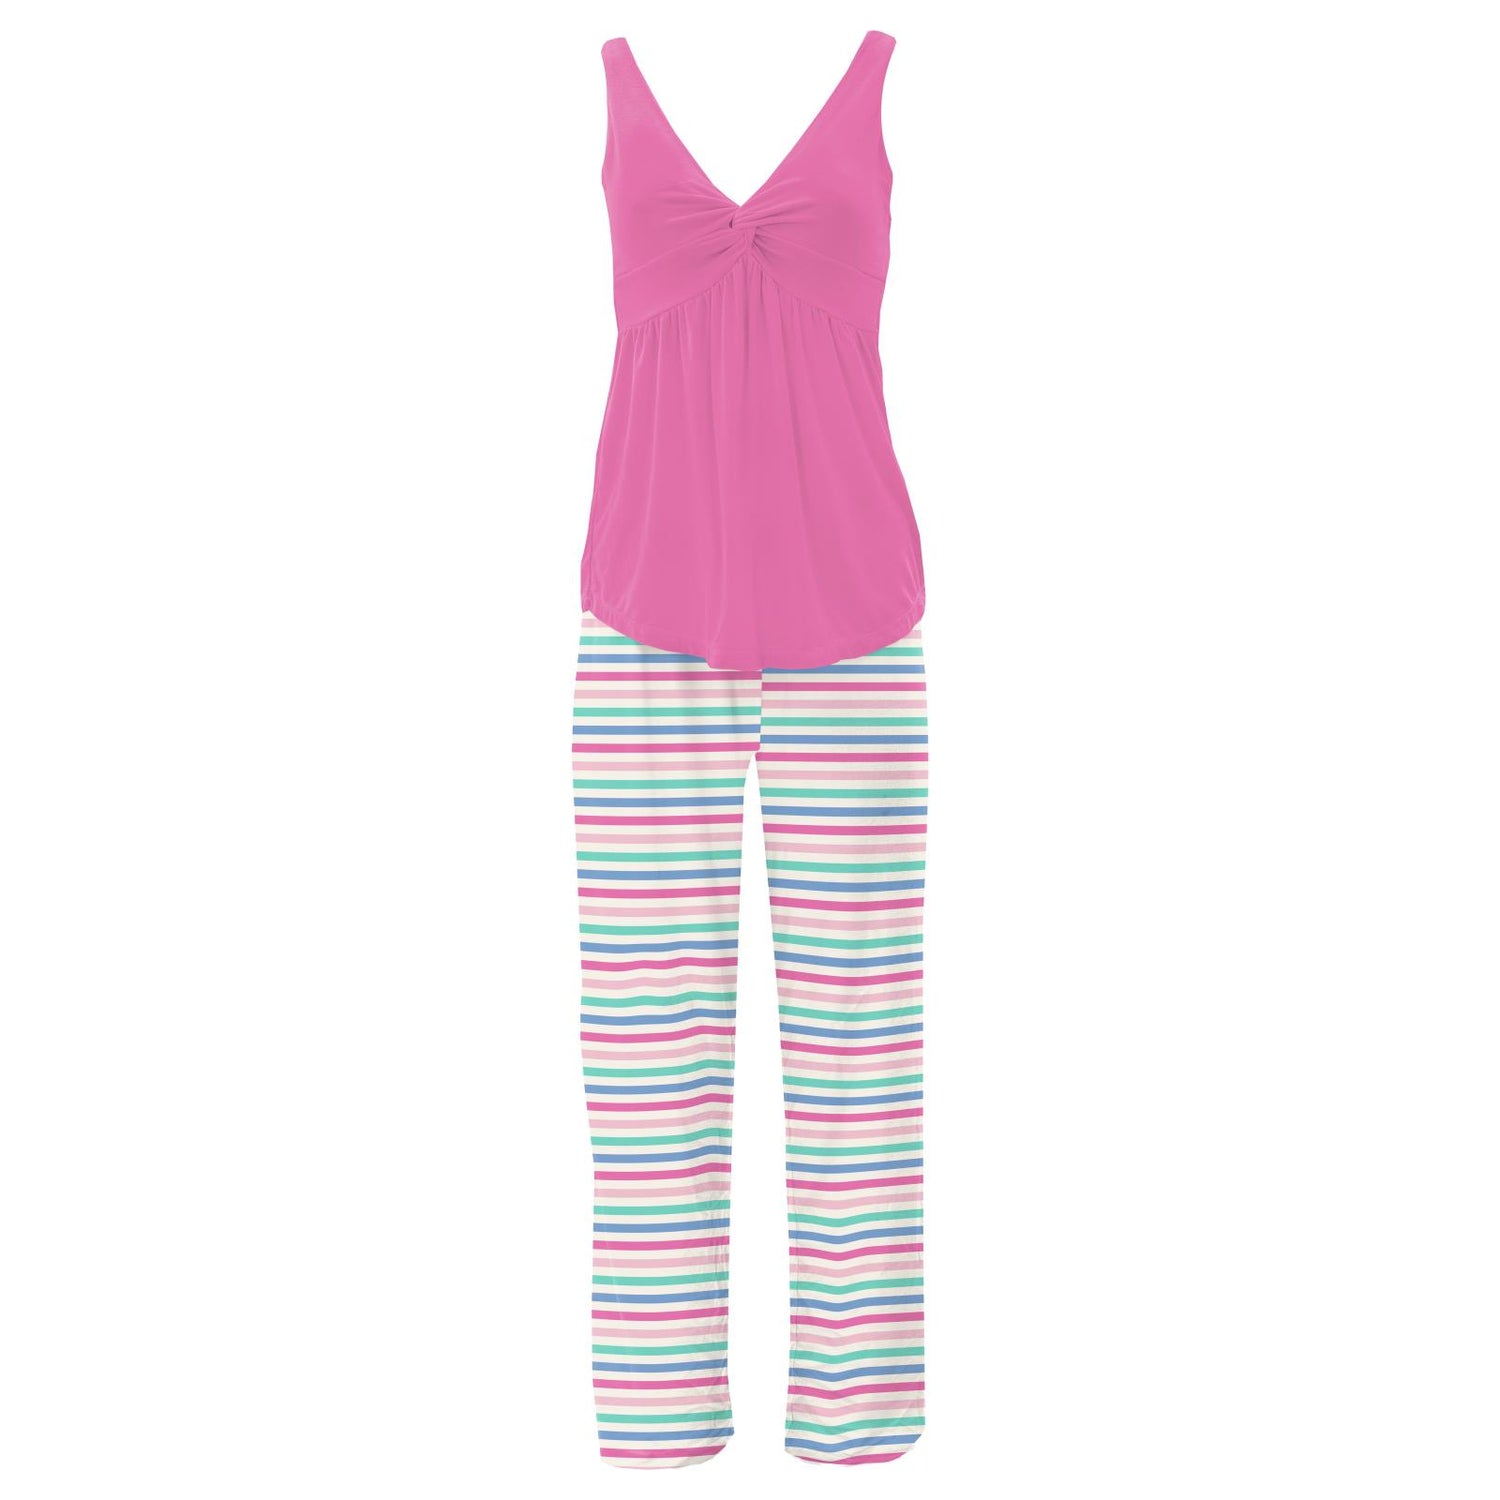 Women's Print Twist Tank and Pajama Pants Set in Skip To My Lou Stripe